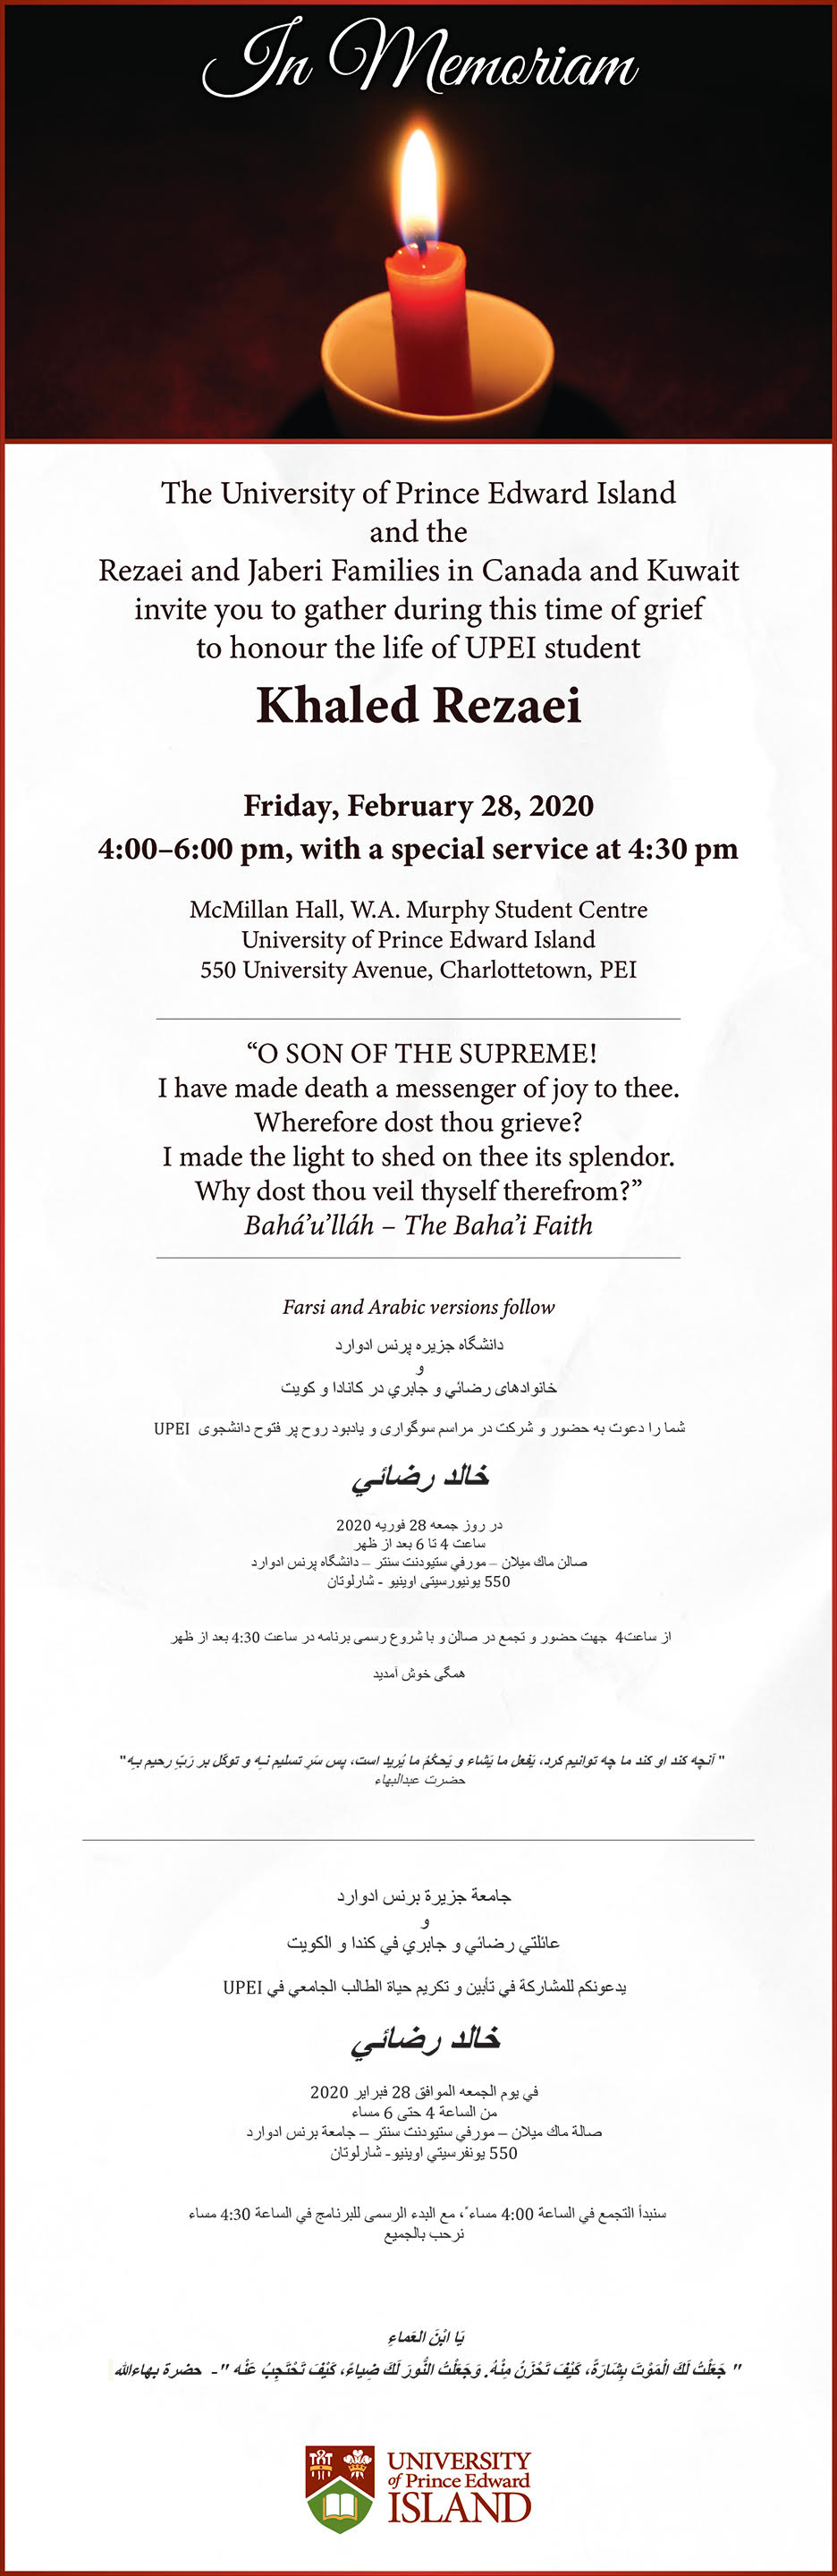 Invitation to memorial service for Khaled Rezaei